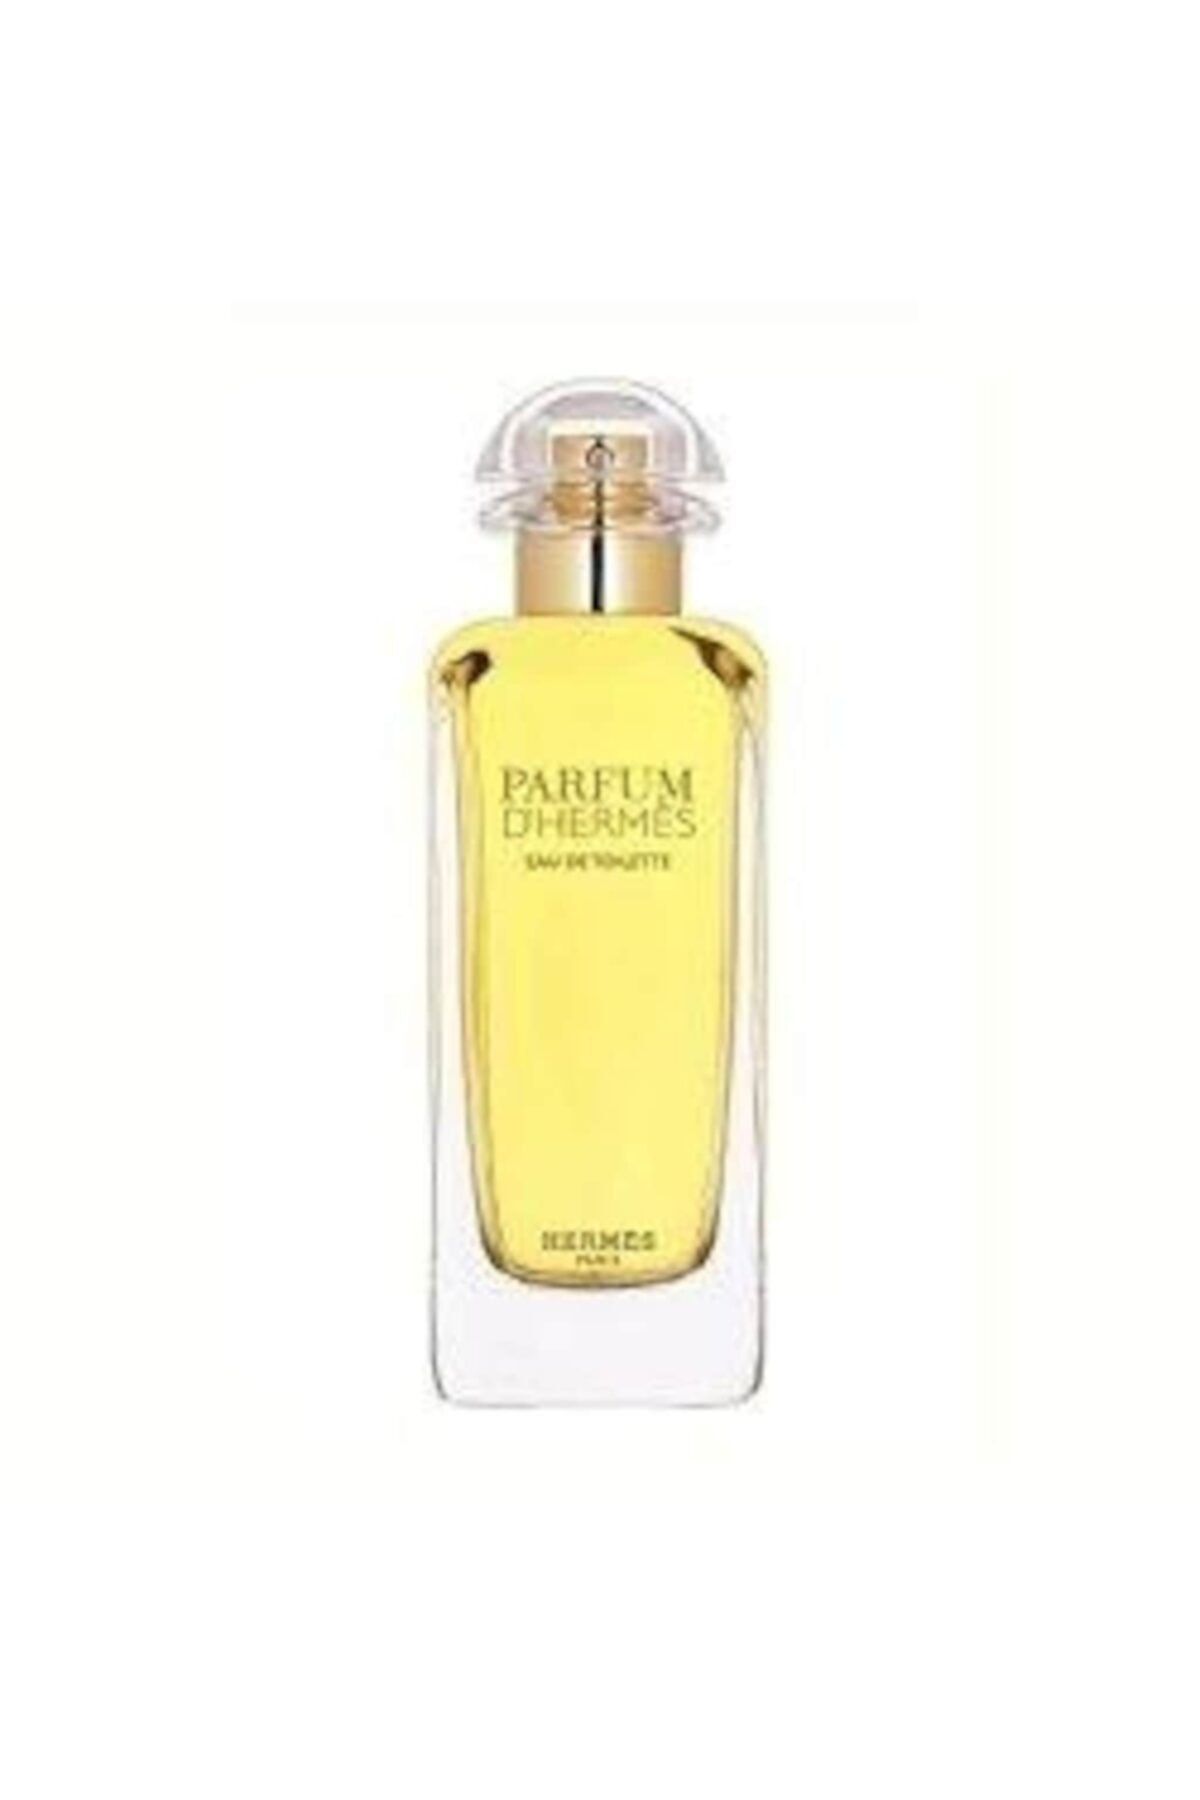 Hermes Parfum D' Edt 100 ml